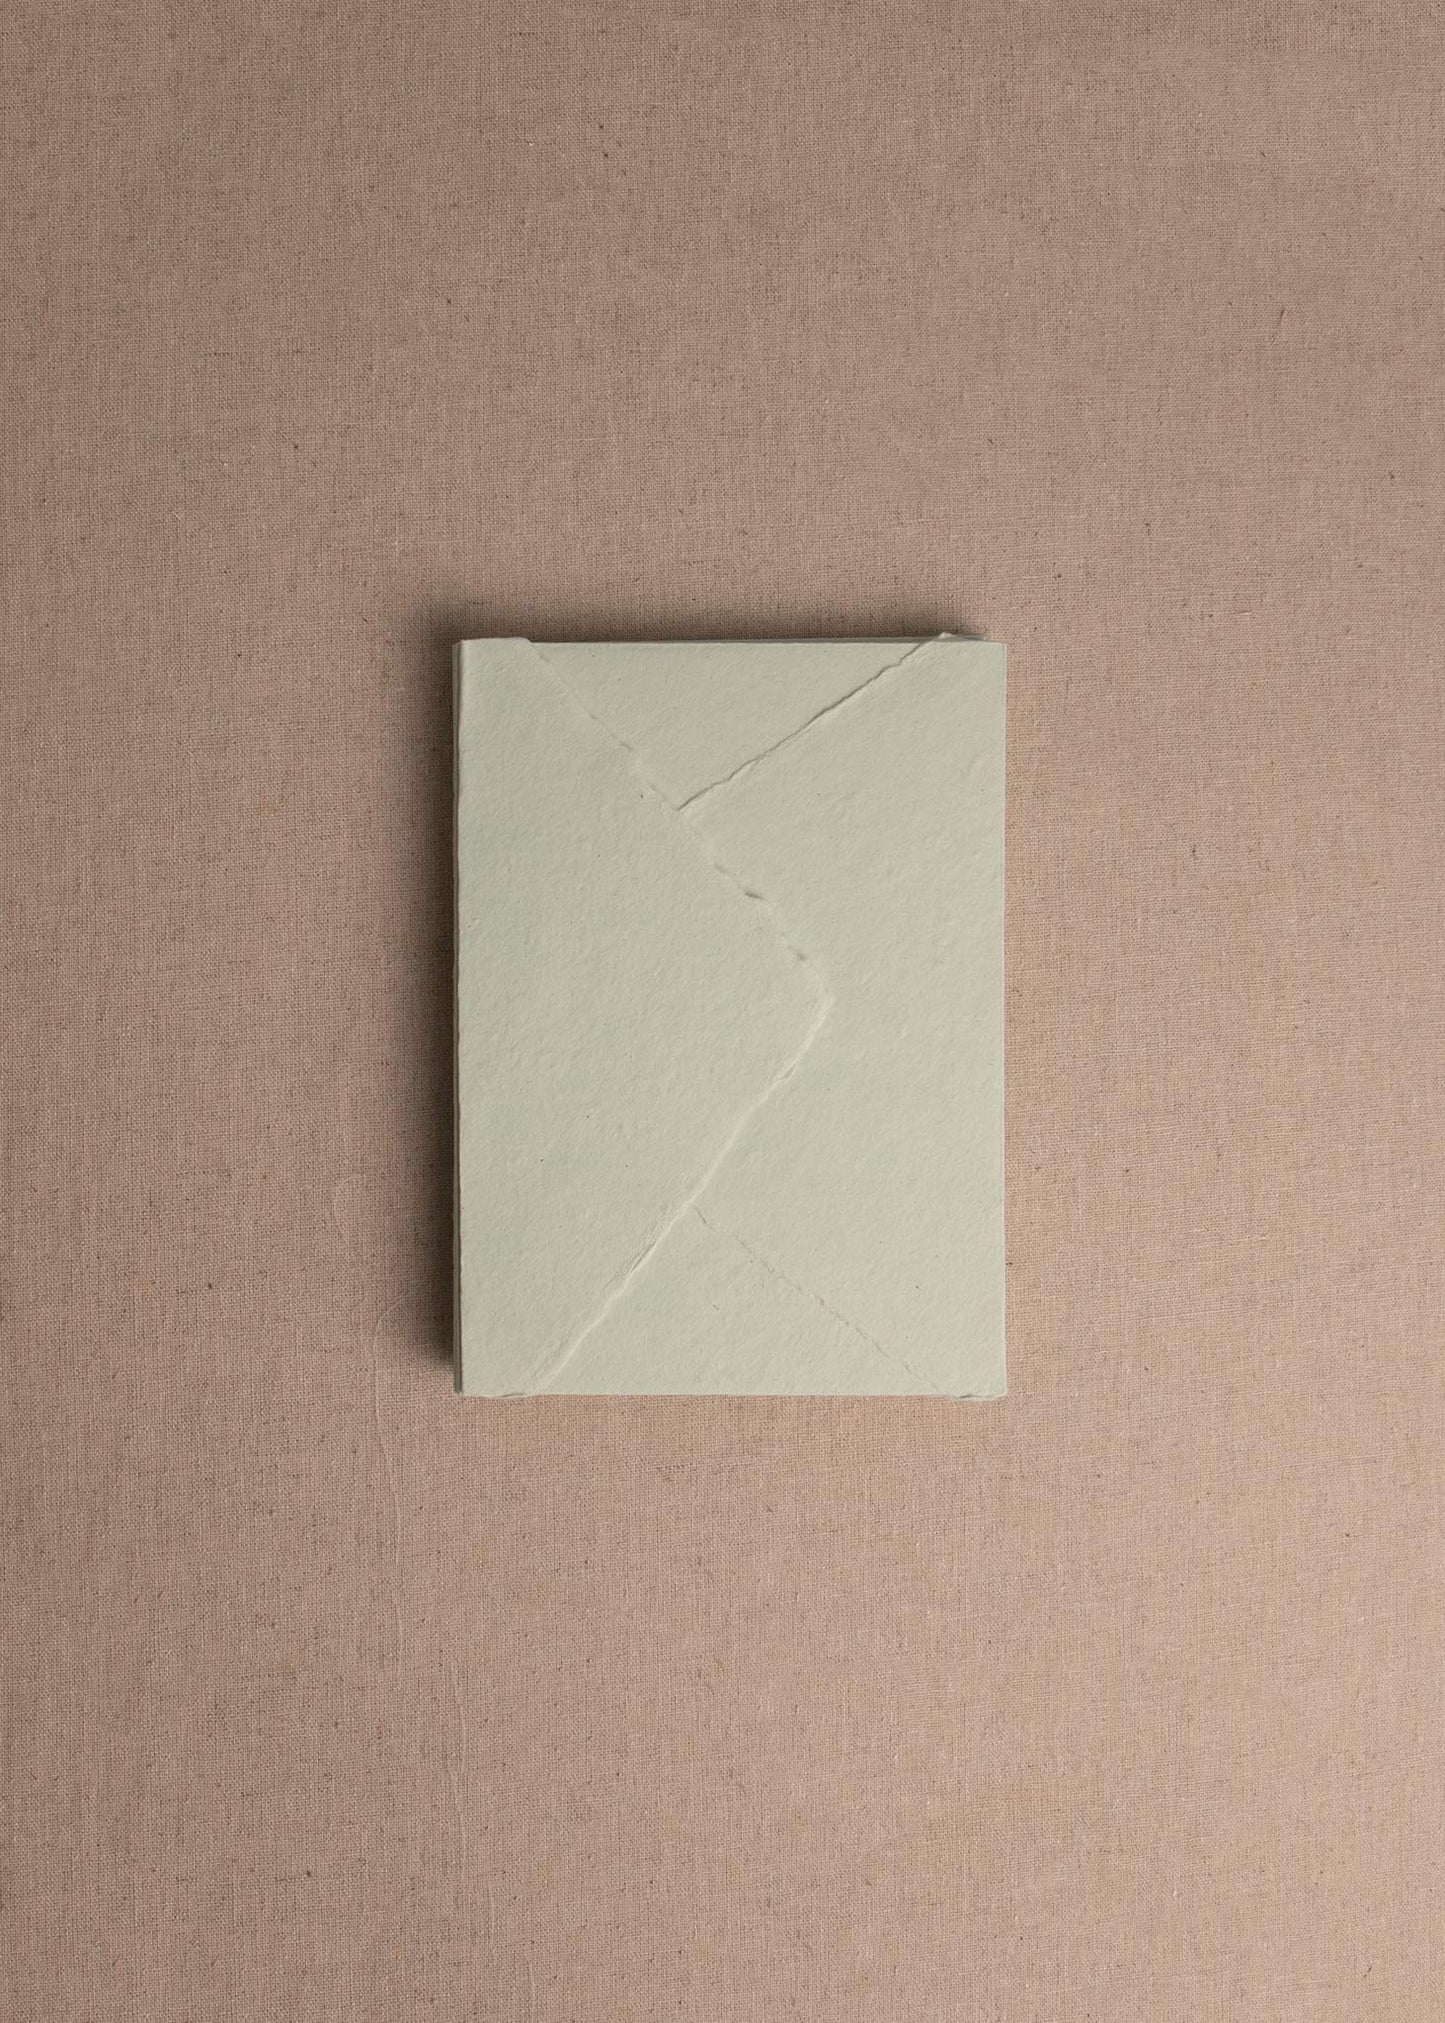 Singular 5x7 Mint Green Handmade paper envelope with deckle edge on linen background